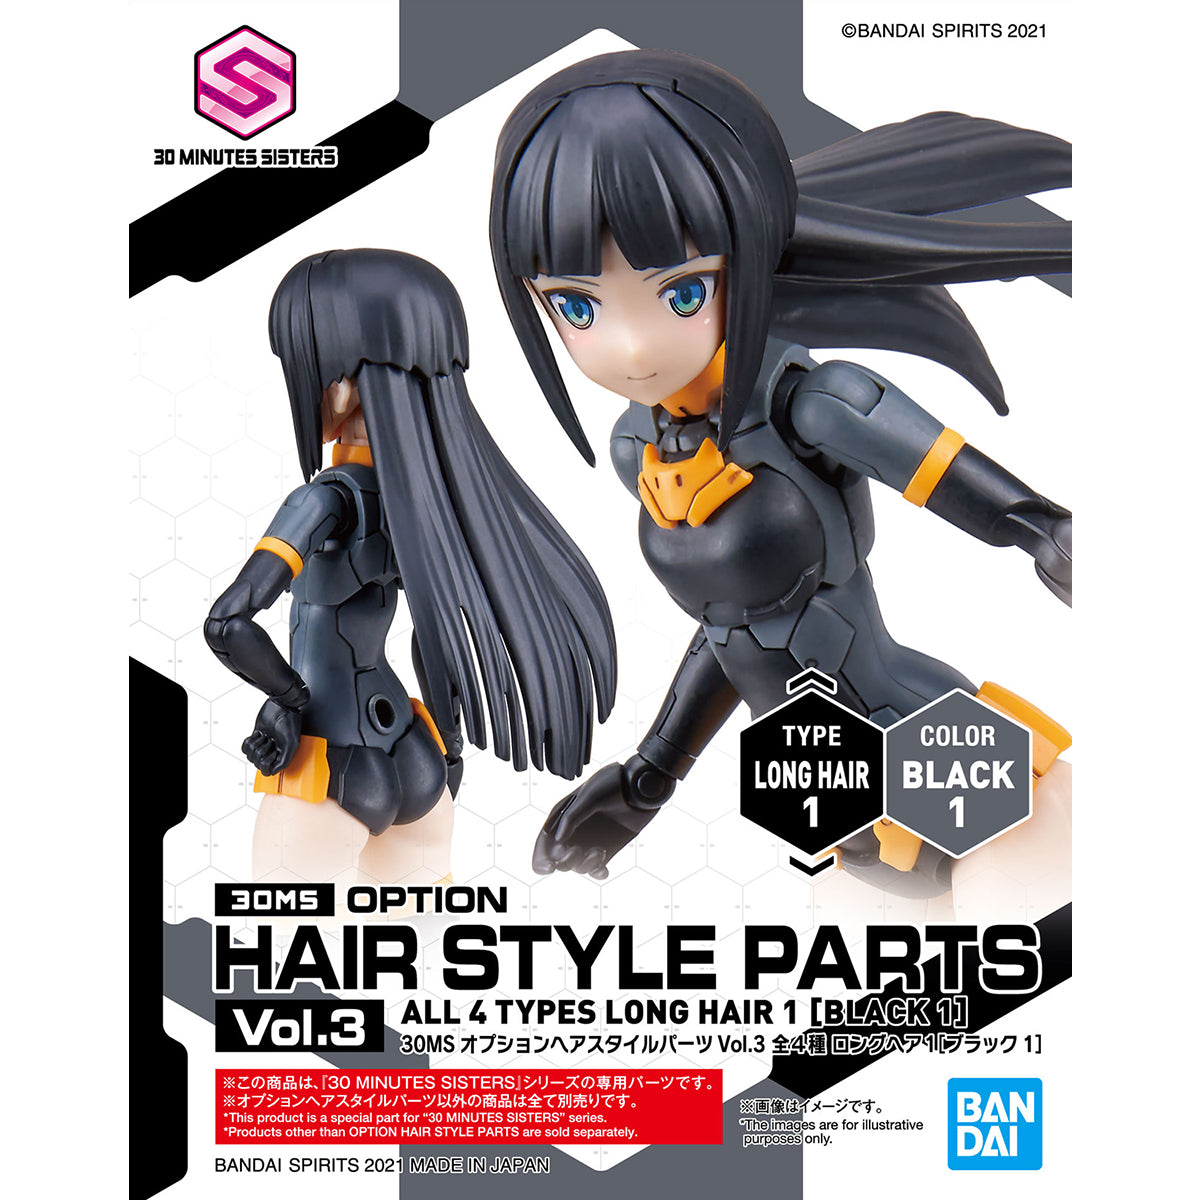 30MS Optional Hairstyle Parts Vol.3 (All 4 Types) - Glacier Hobbies - Bandai